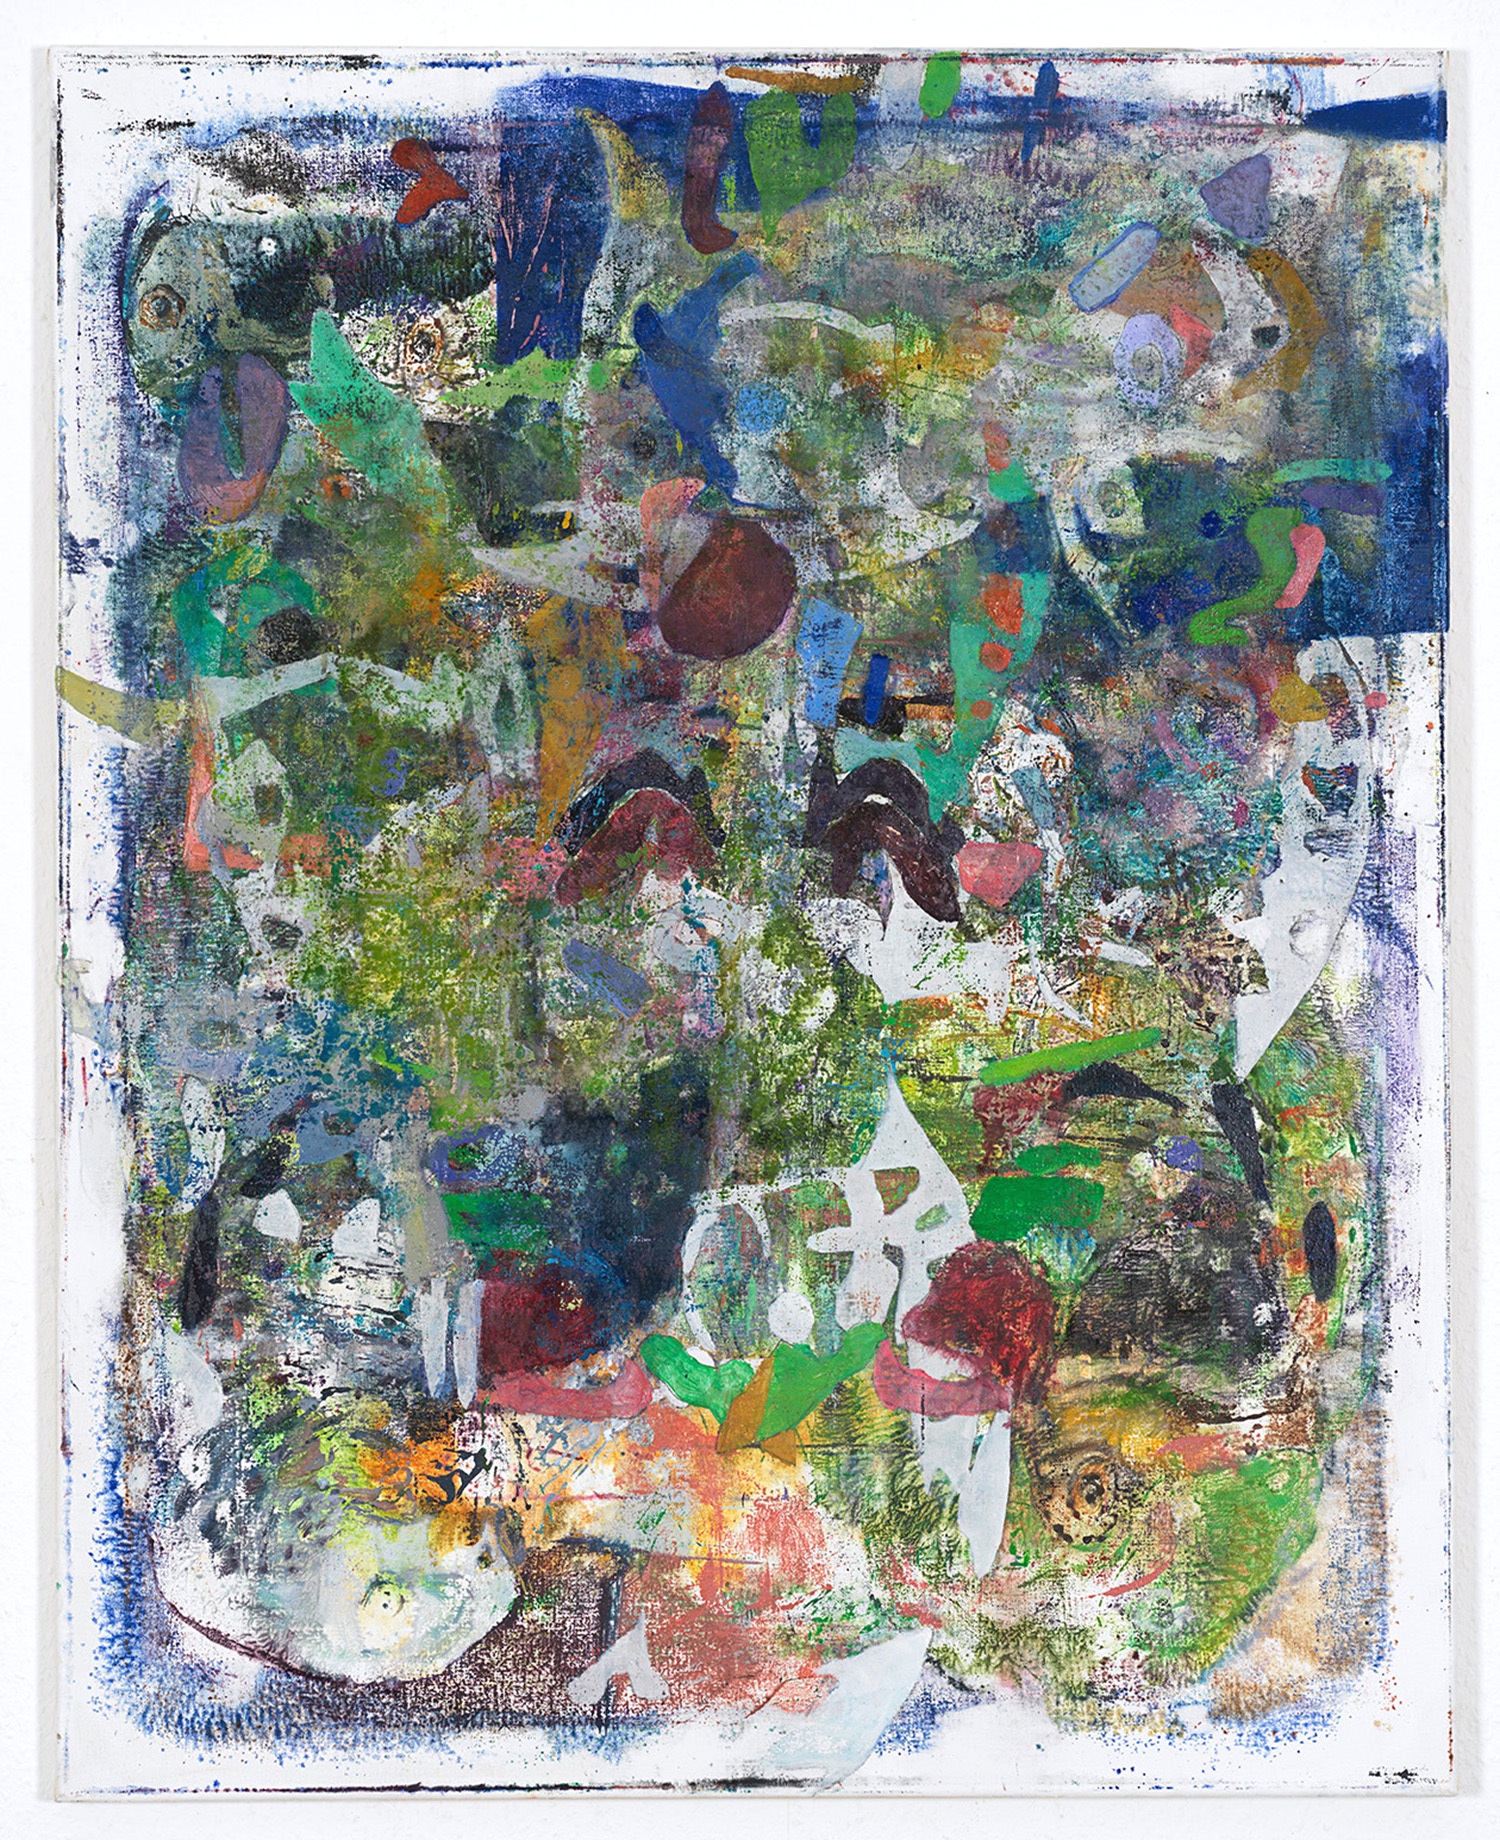  Pierres, 2019  100 x 80 cm. oil on canvas 